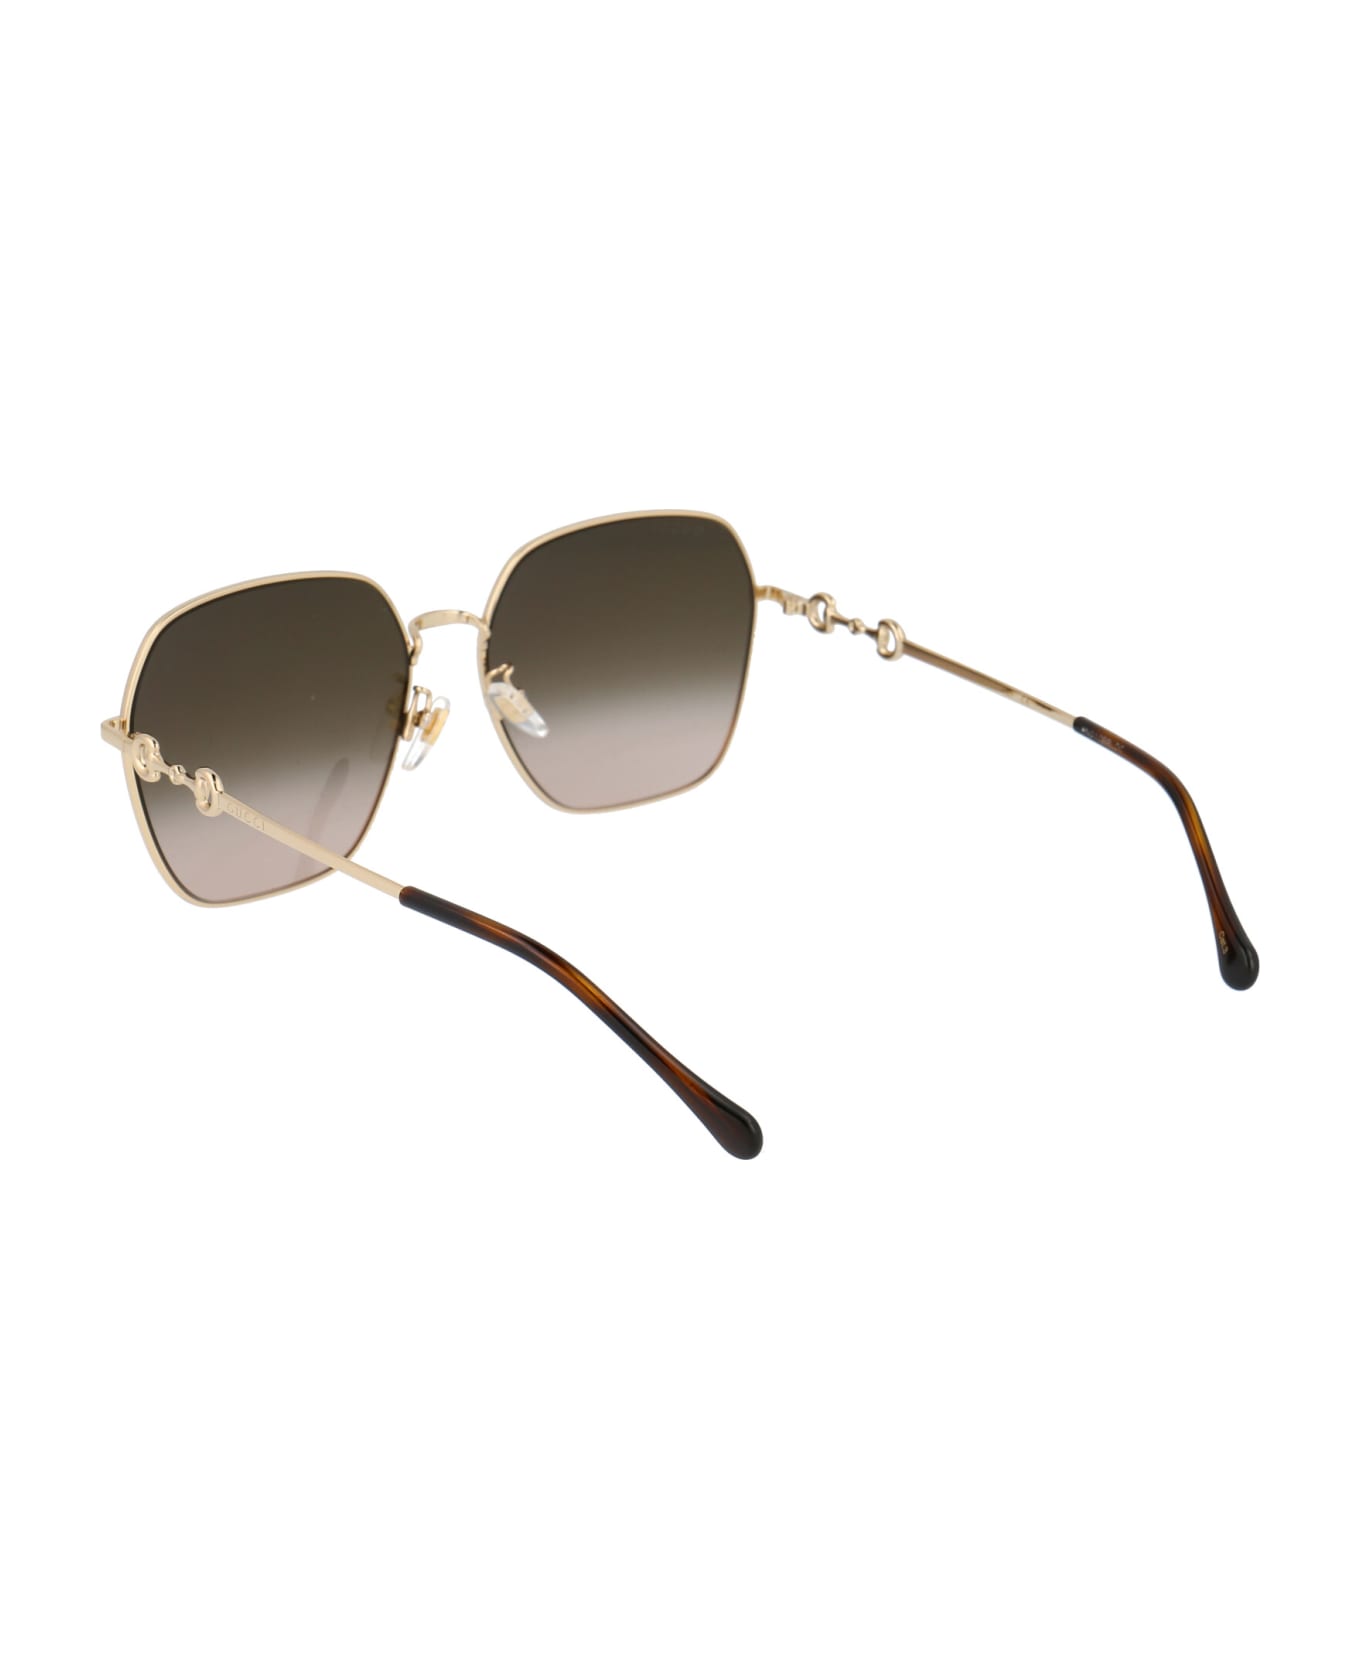 Gucci Eyewear Gg0882sa Sunglasses - 002 GOLD GOLD BROWN